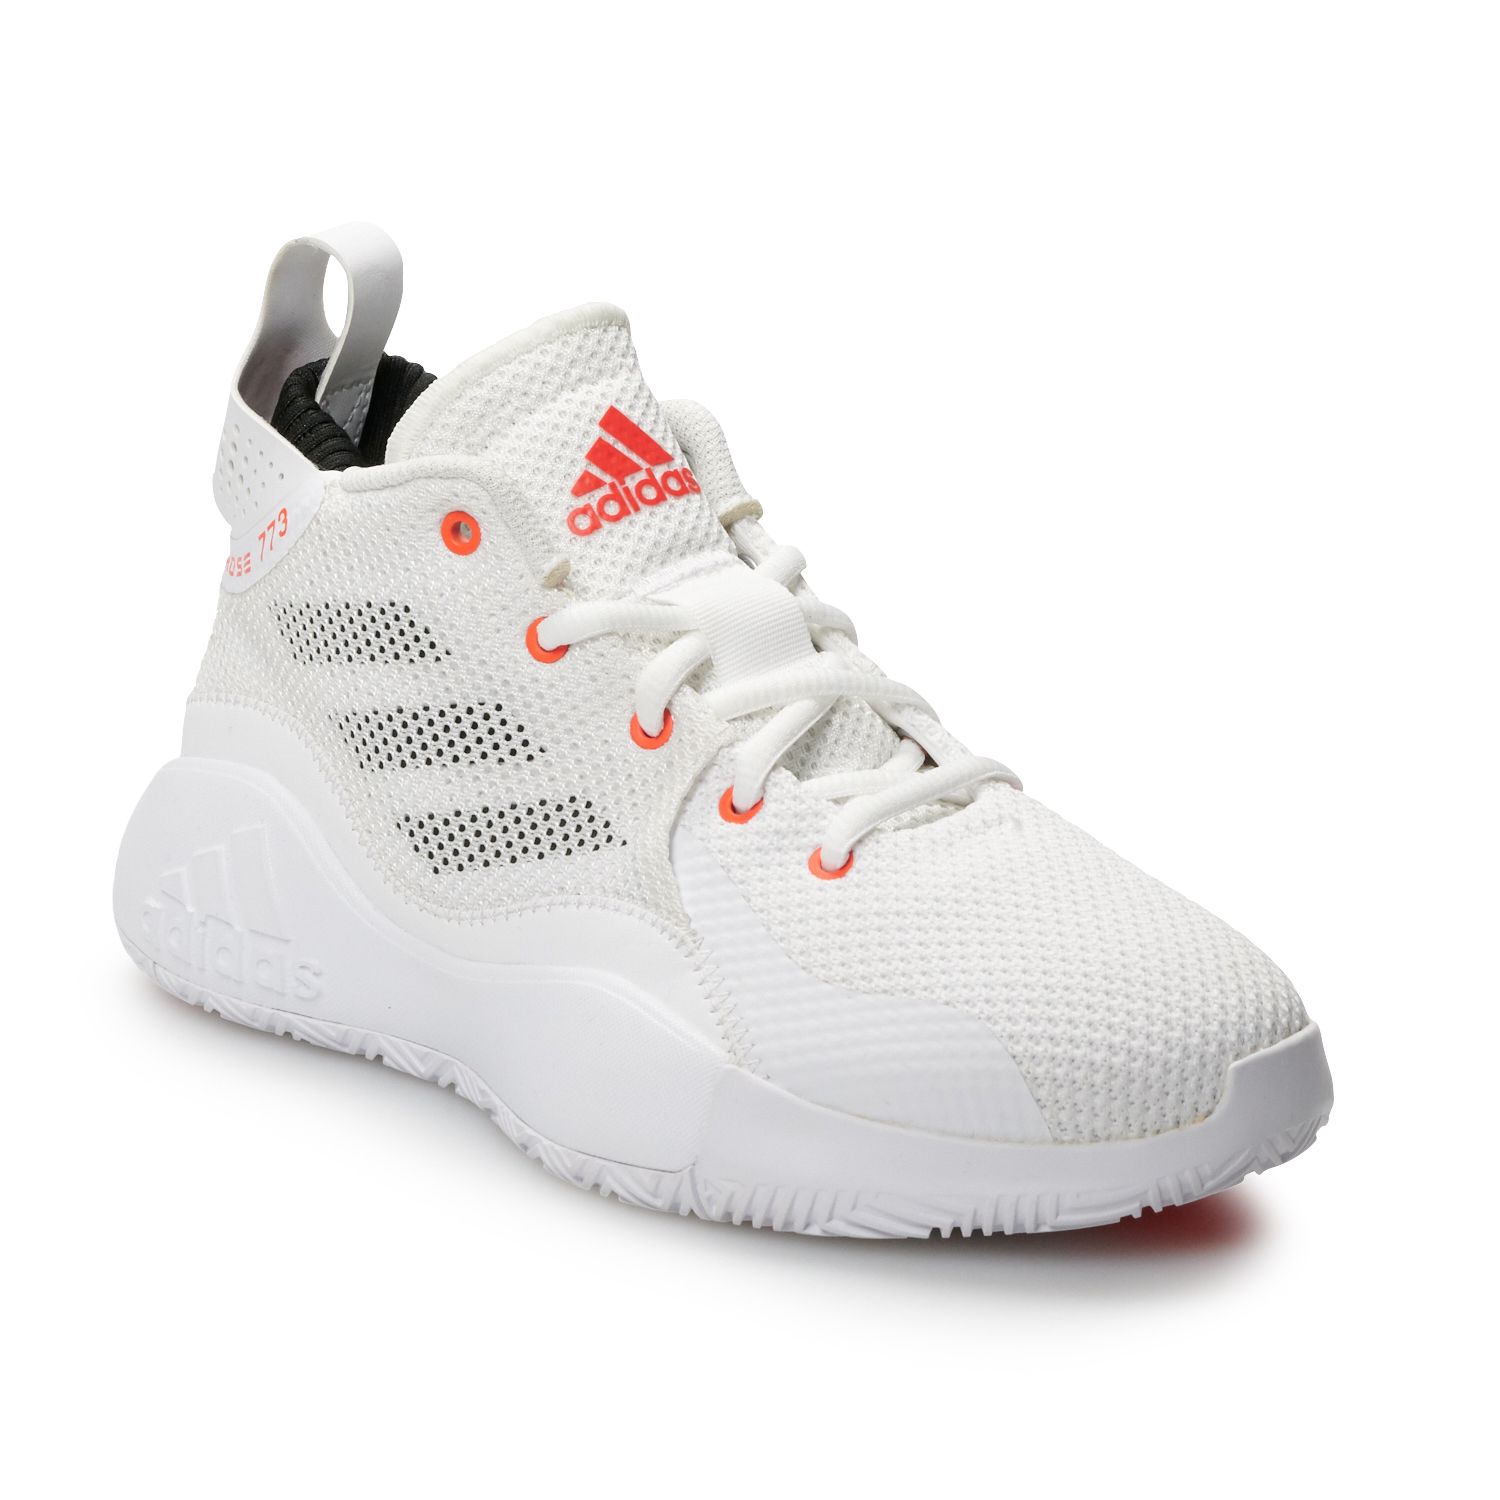 adidas shoes basketball 2020